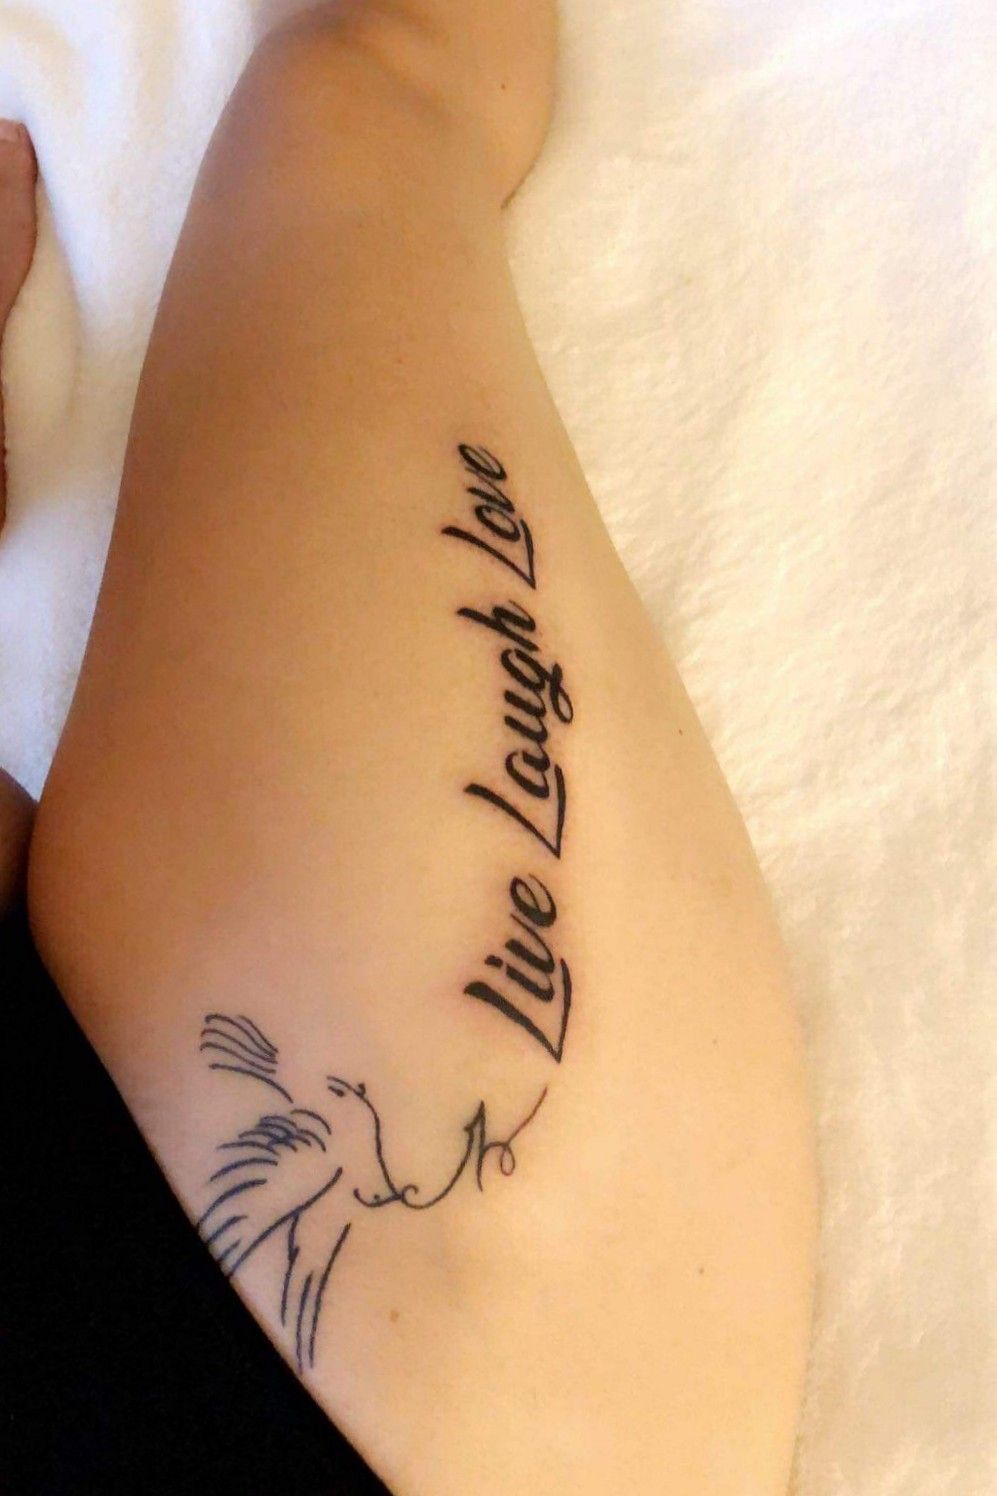 Pin by Cayley Mckenzie on Tattoos  Wrist tattoos words Side wrist tattoos  Love wrist tattoo